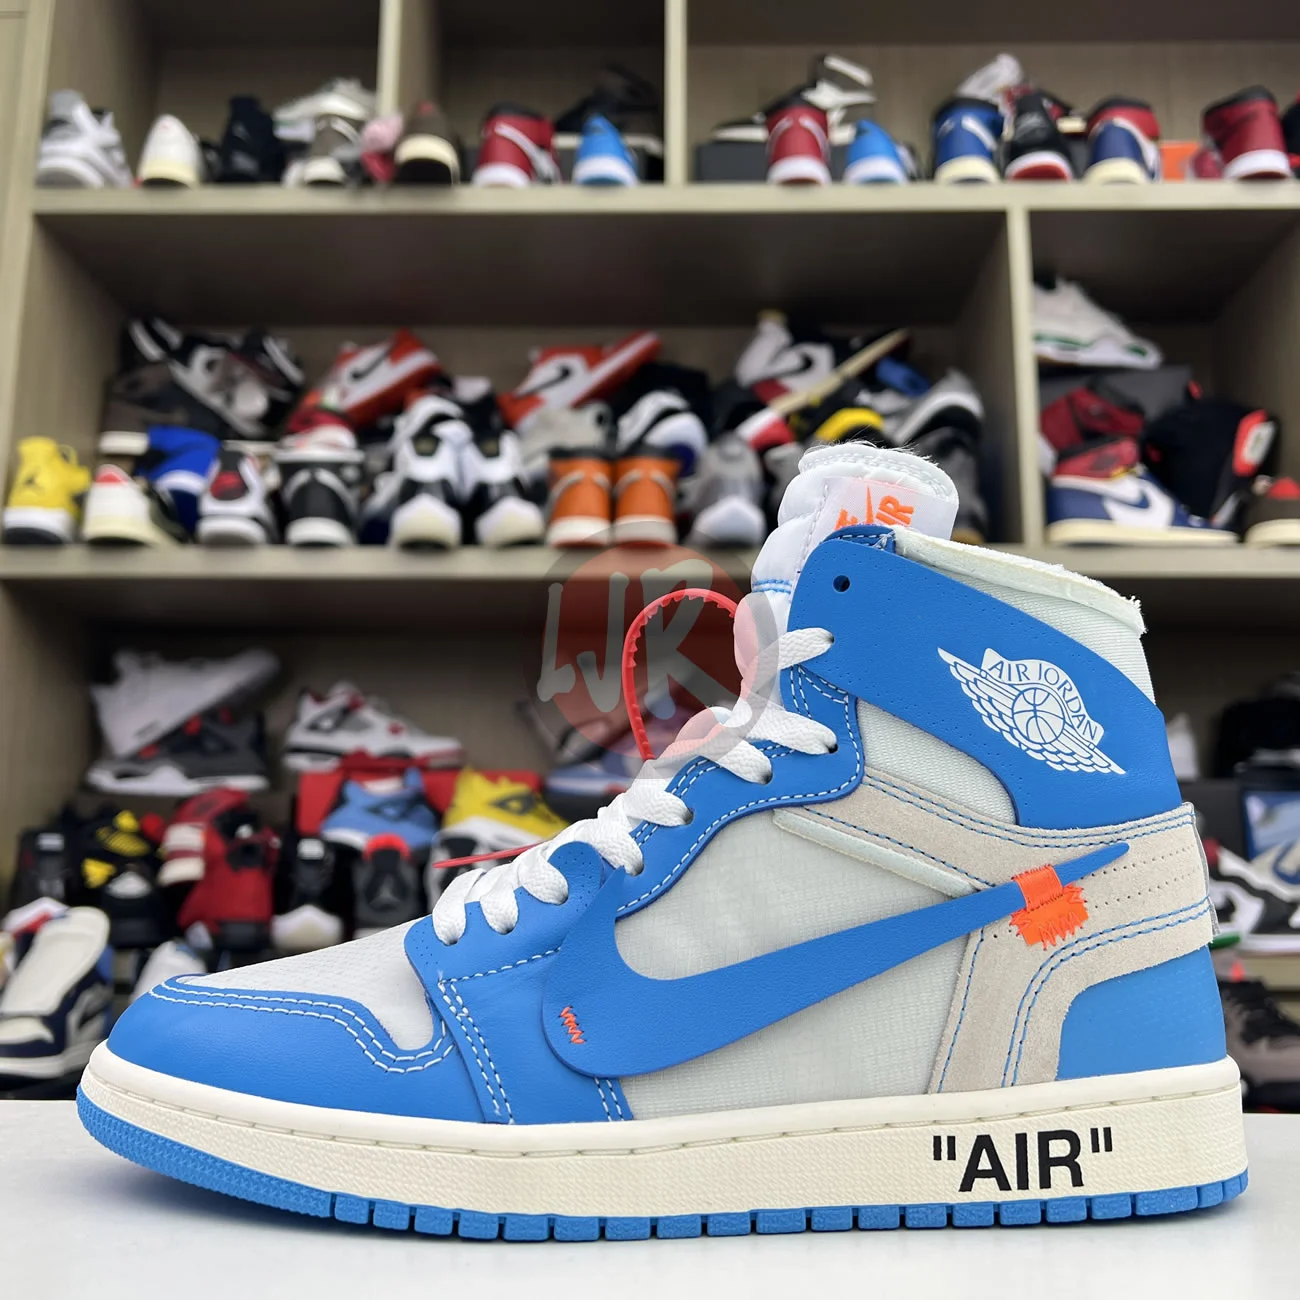 Air Jordan 1 Retro High Off White University Blue Aq0818 148 Ljr Sneakers (0) - bc-ljr.com